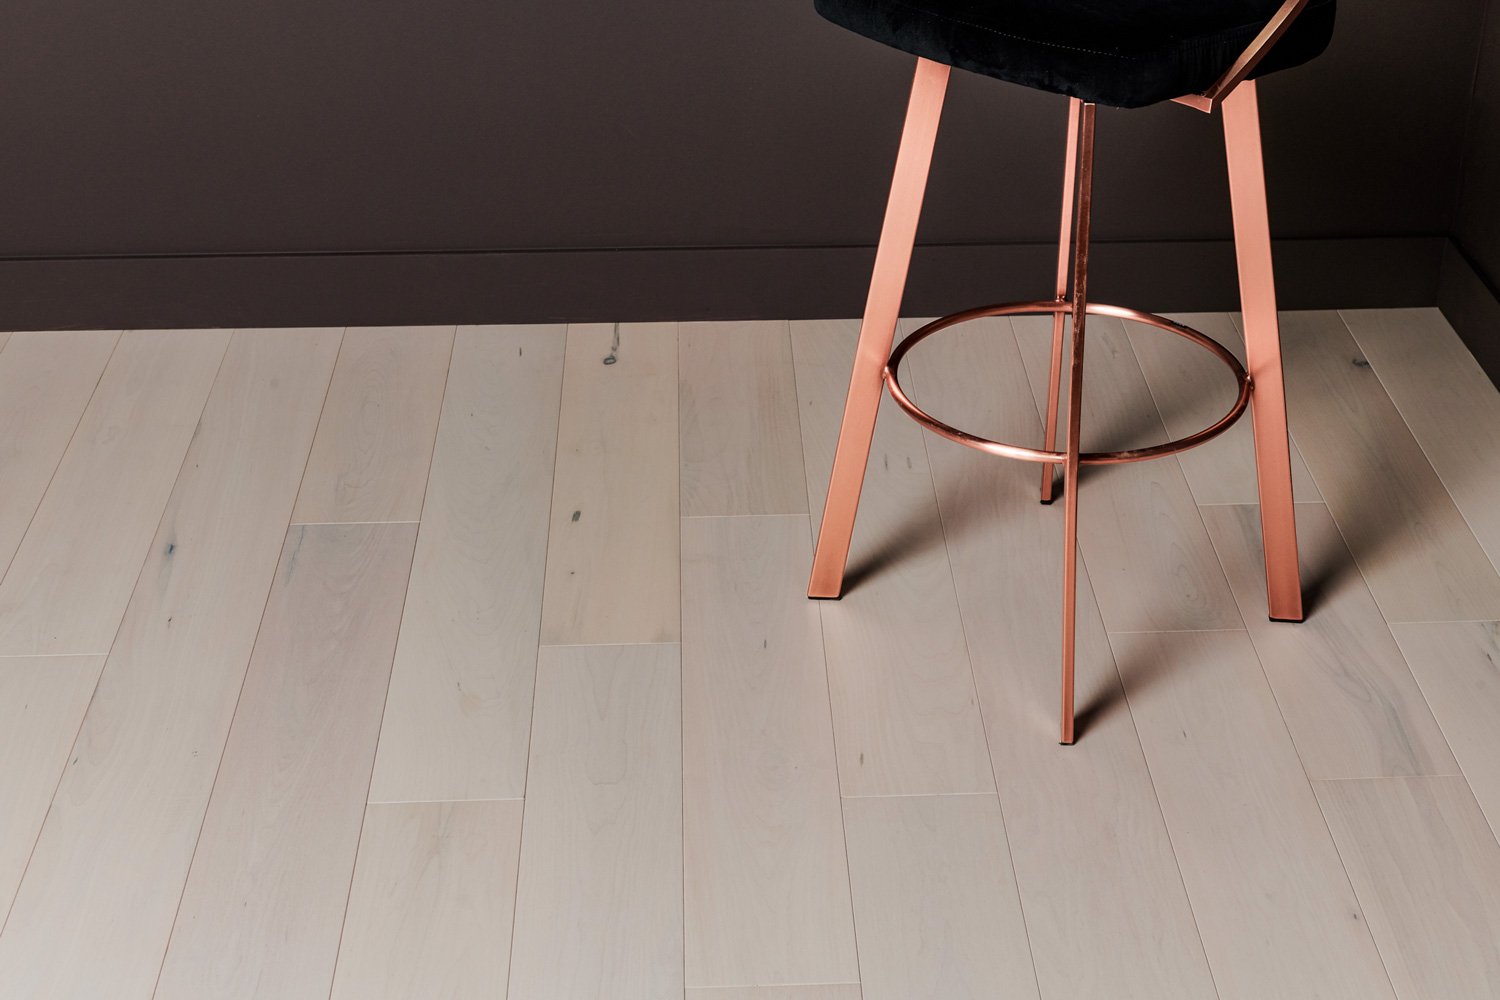 Parato 6-1/2″ Wide – Maple Engineered Hardwood Flooring